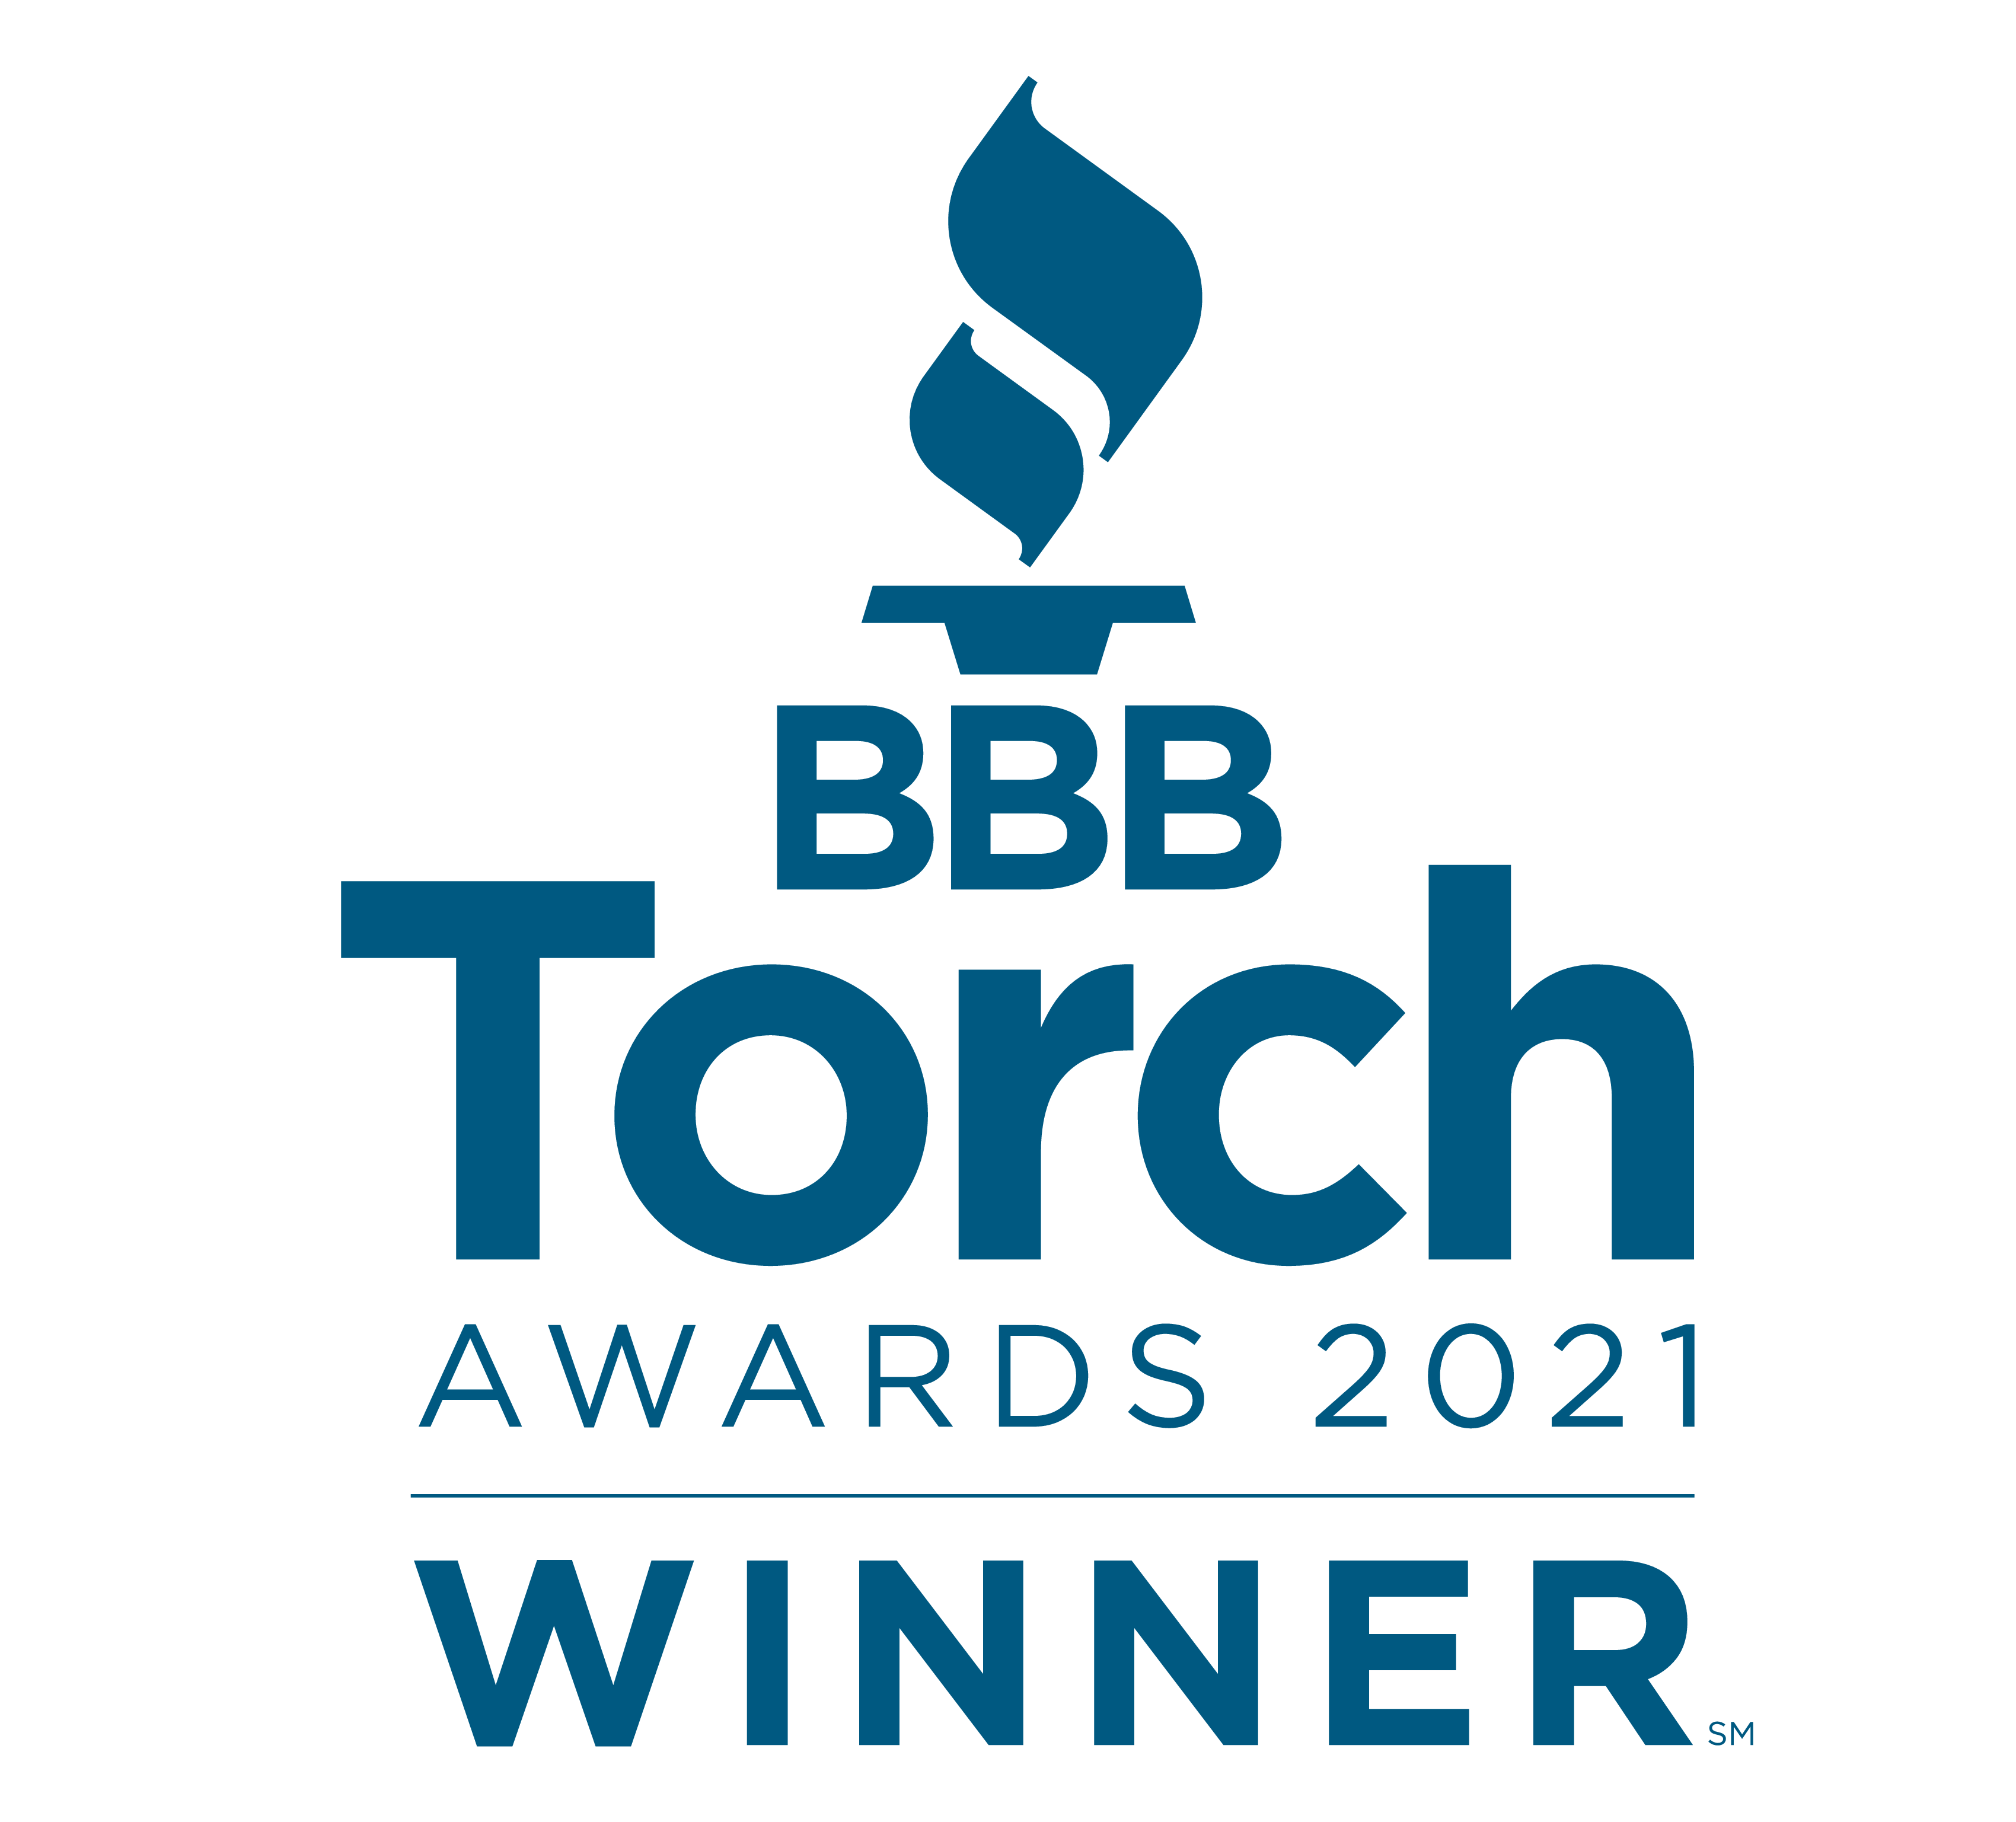 BBB Torch Awards 2021 Winner